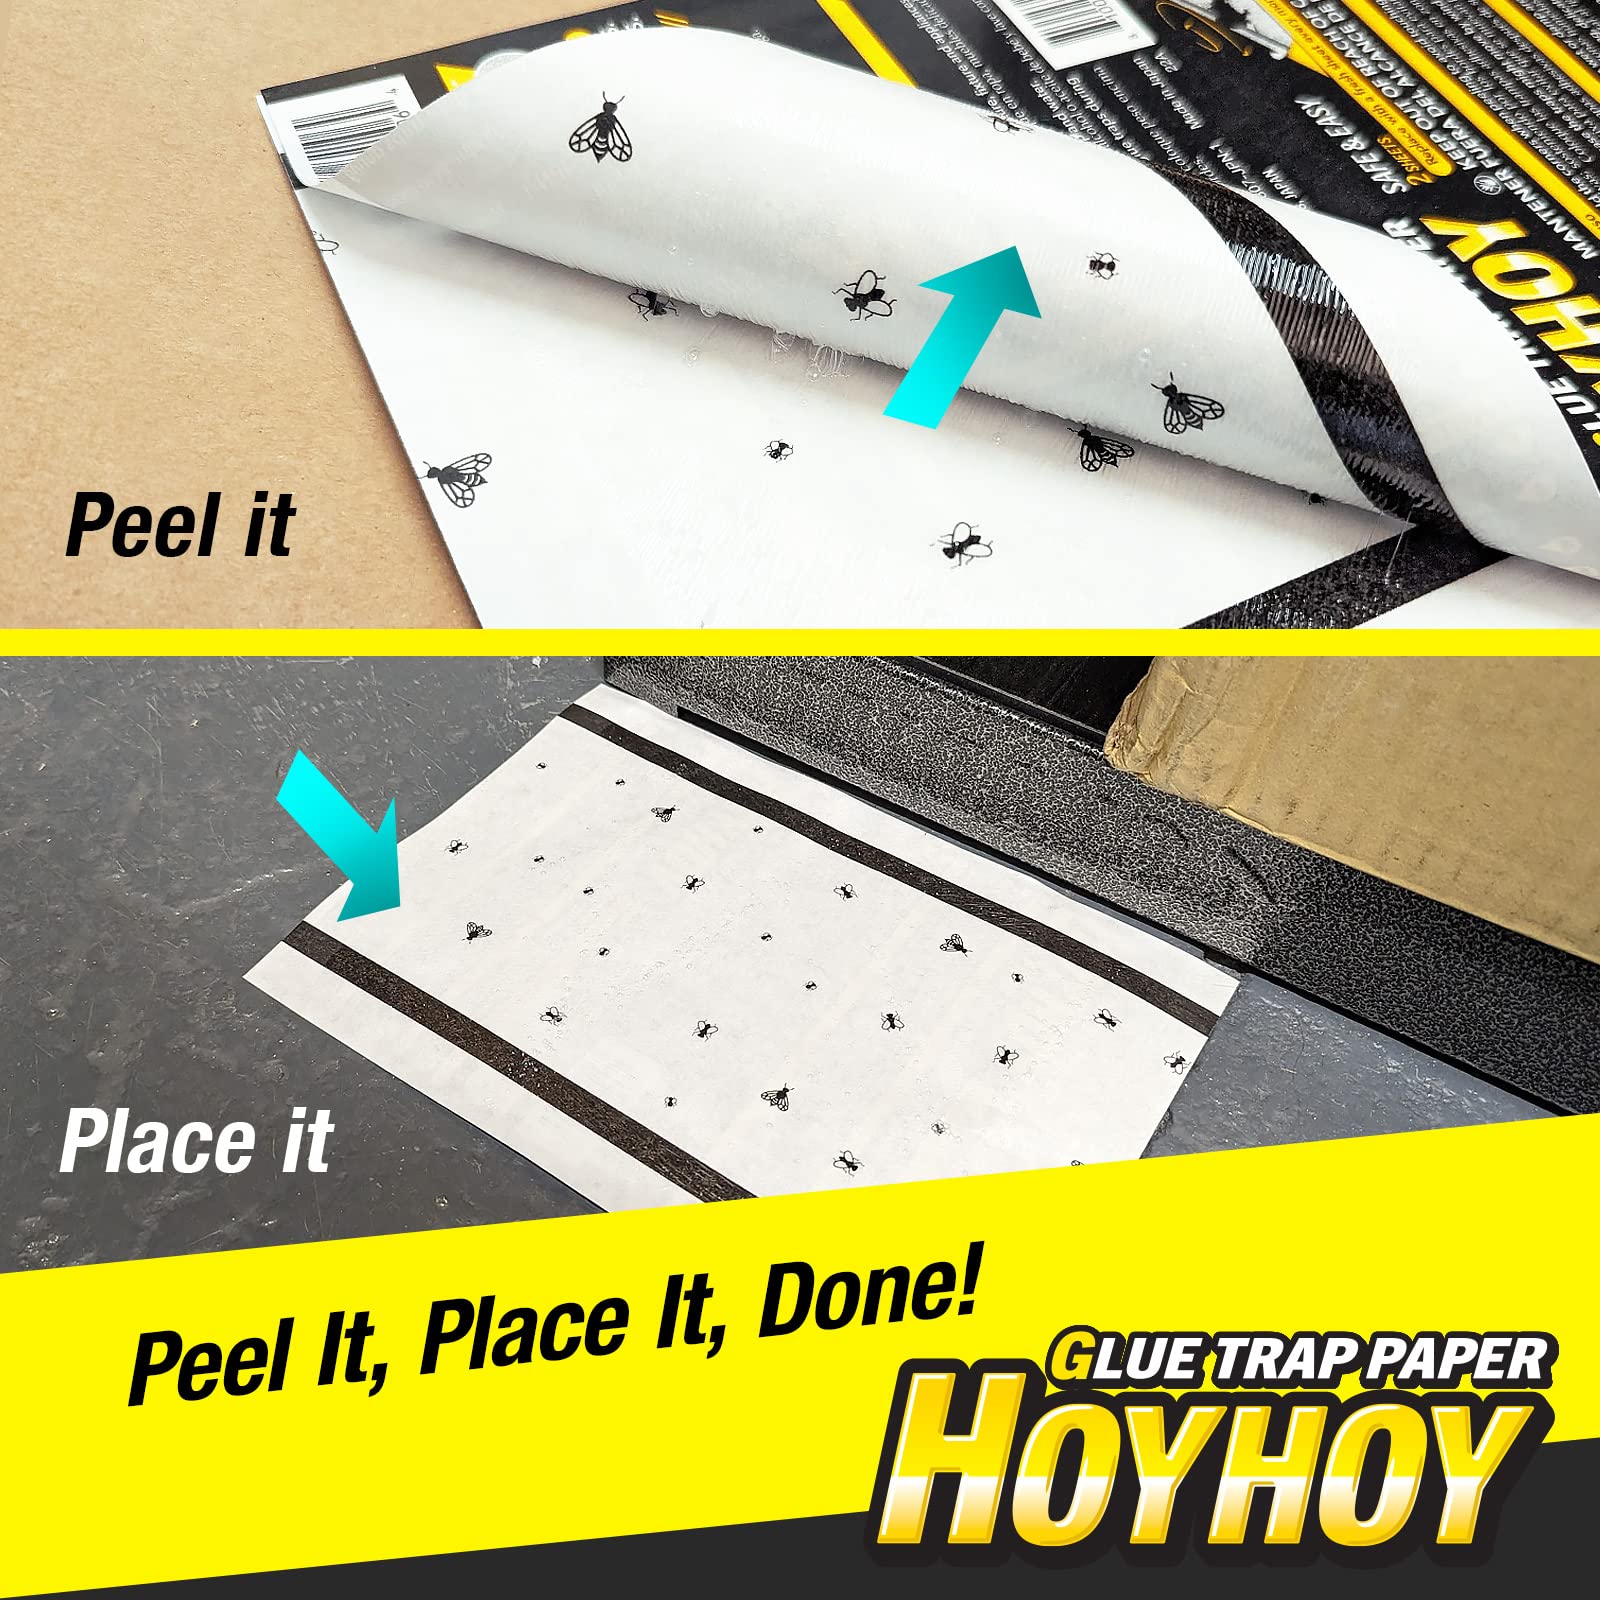 HOY HOY Jumbo Size Rat & Mouse Indoor / Outdoor Glue Trap 2  -  HOY HOY USA